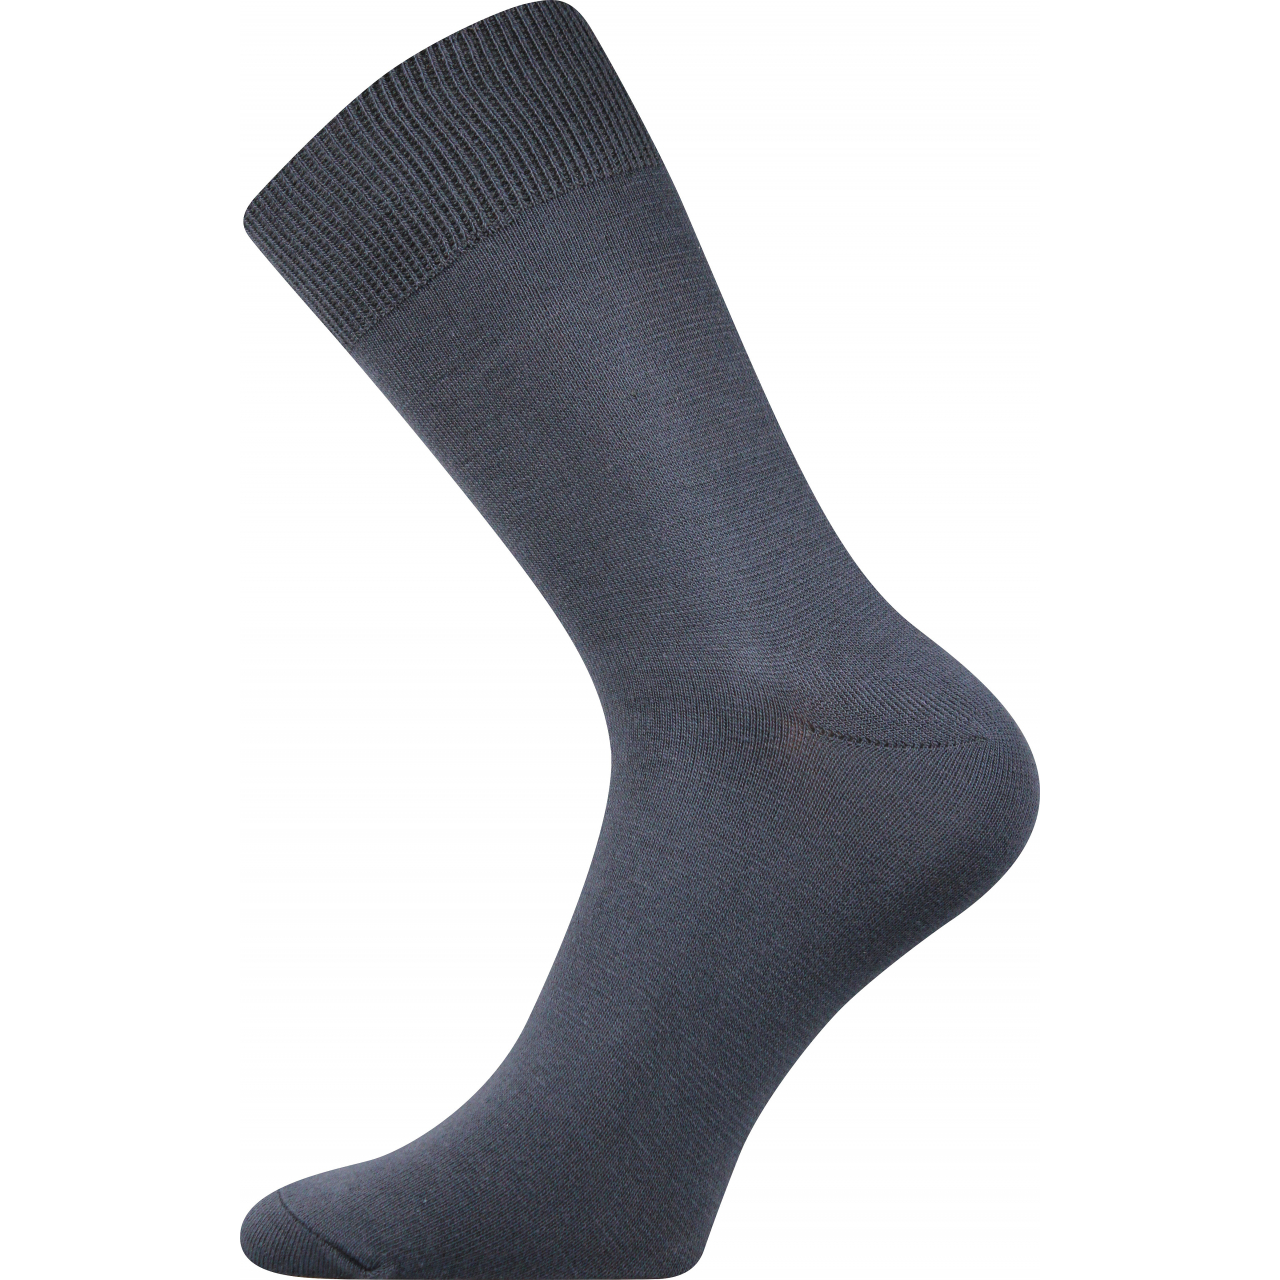 Ponožky unisex klasické Boma Radovan-a - tmavě šedé, 35-38